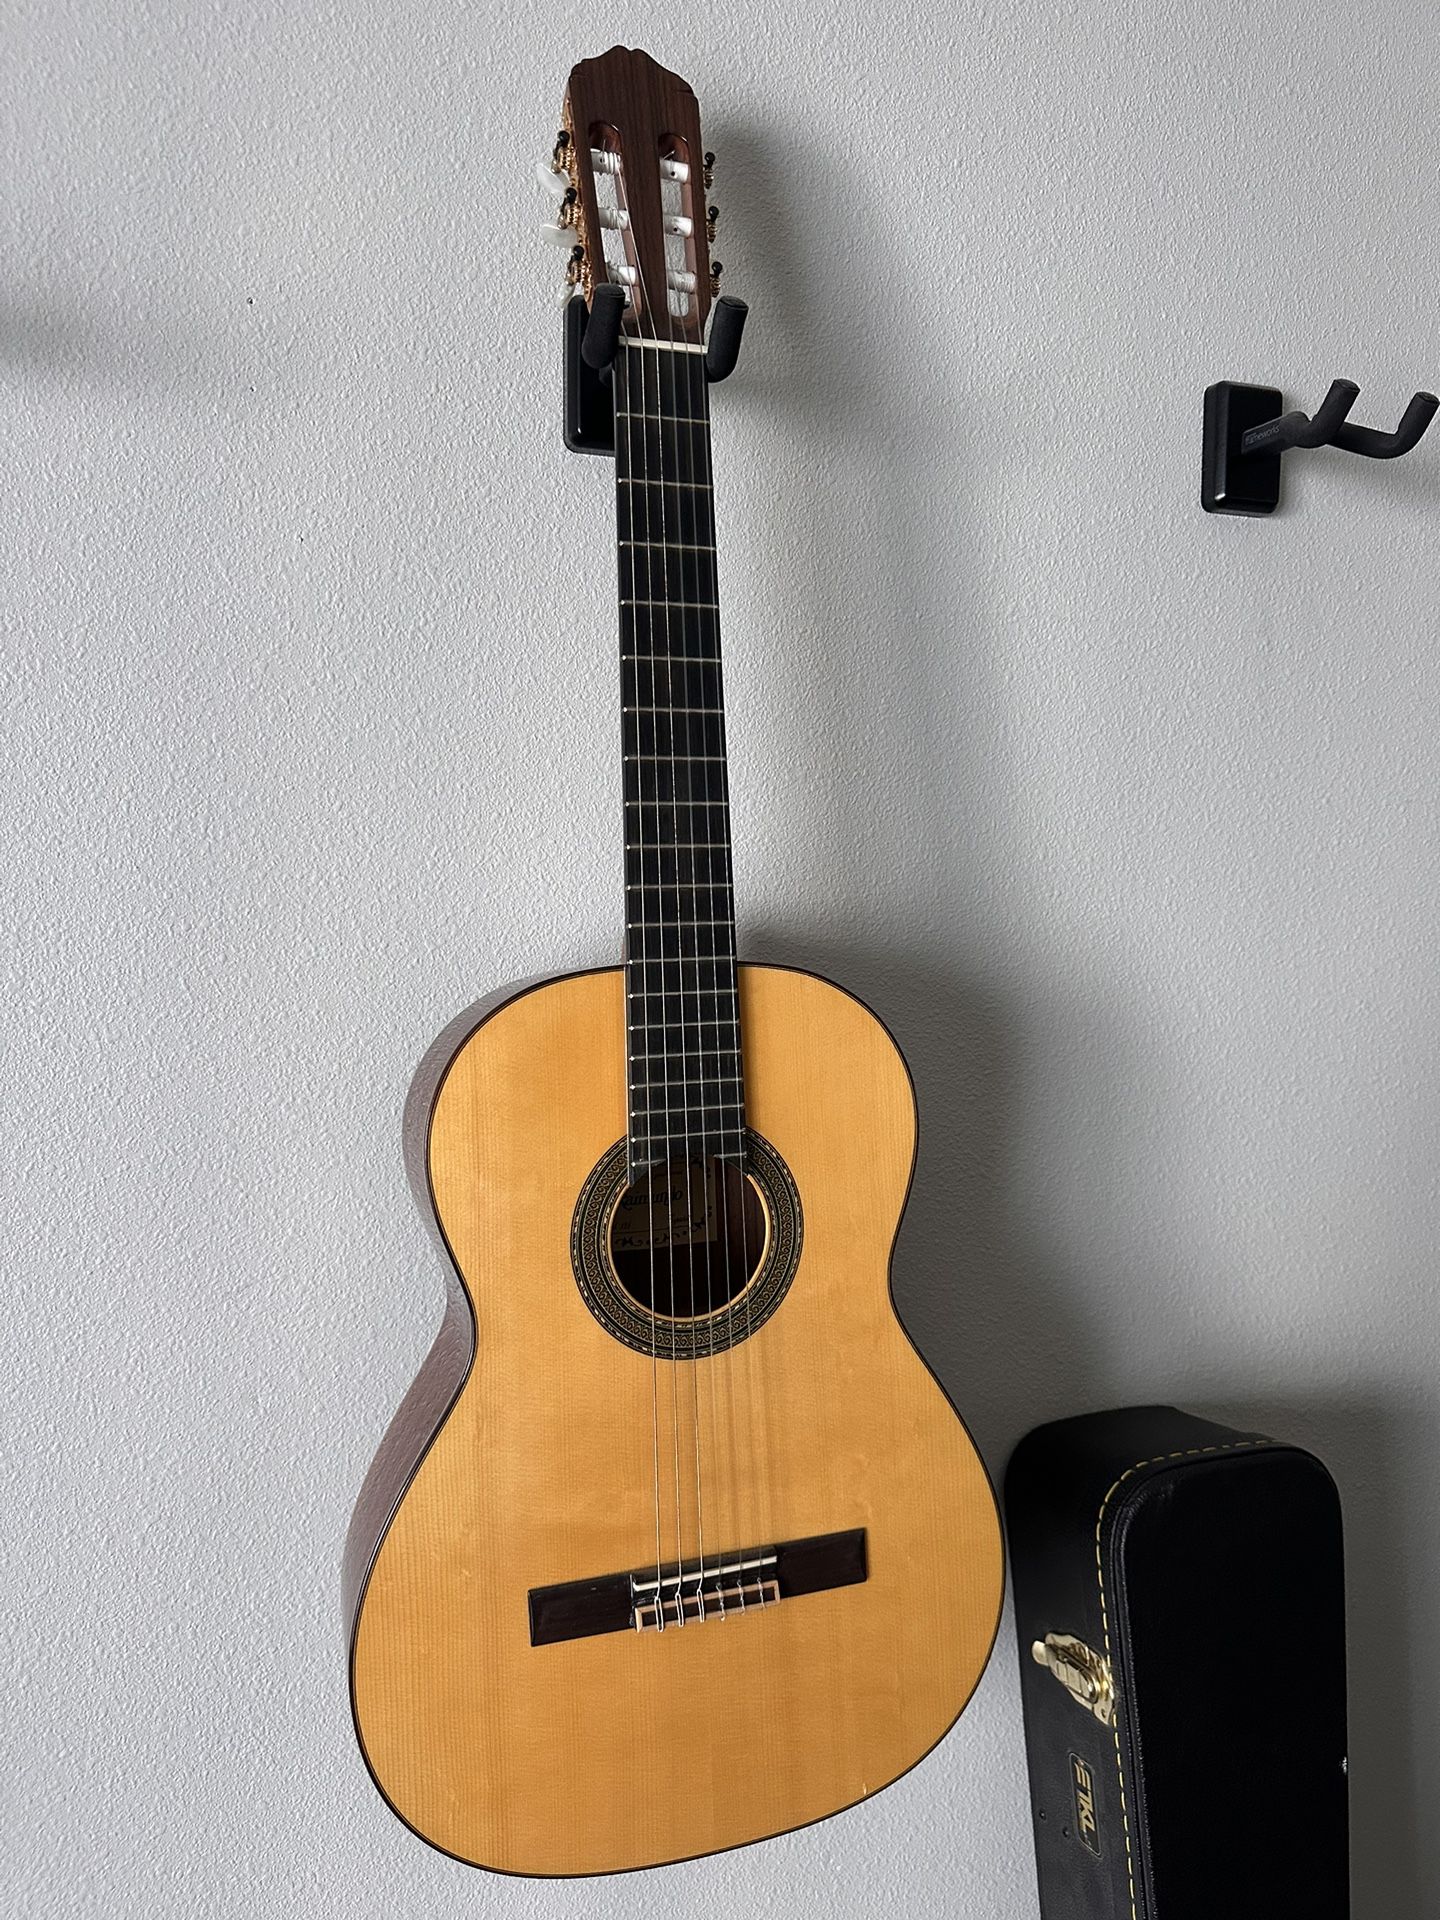 Raimundo 128 Classical Guitar